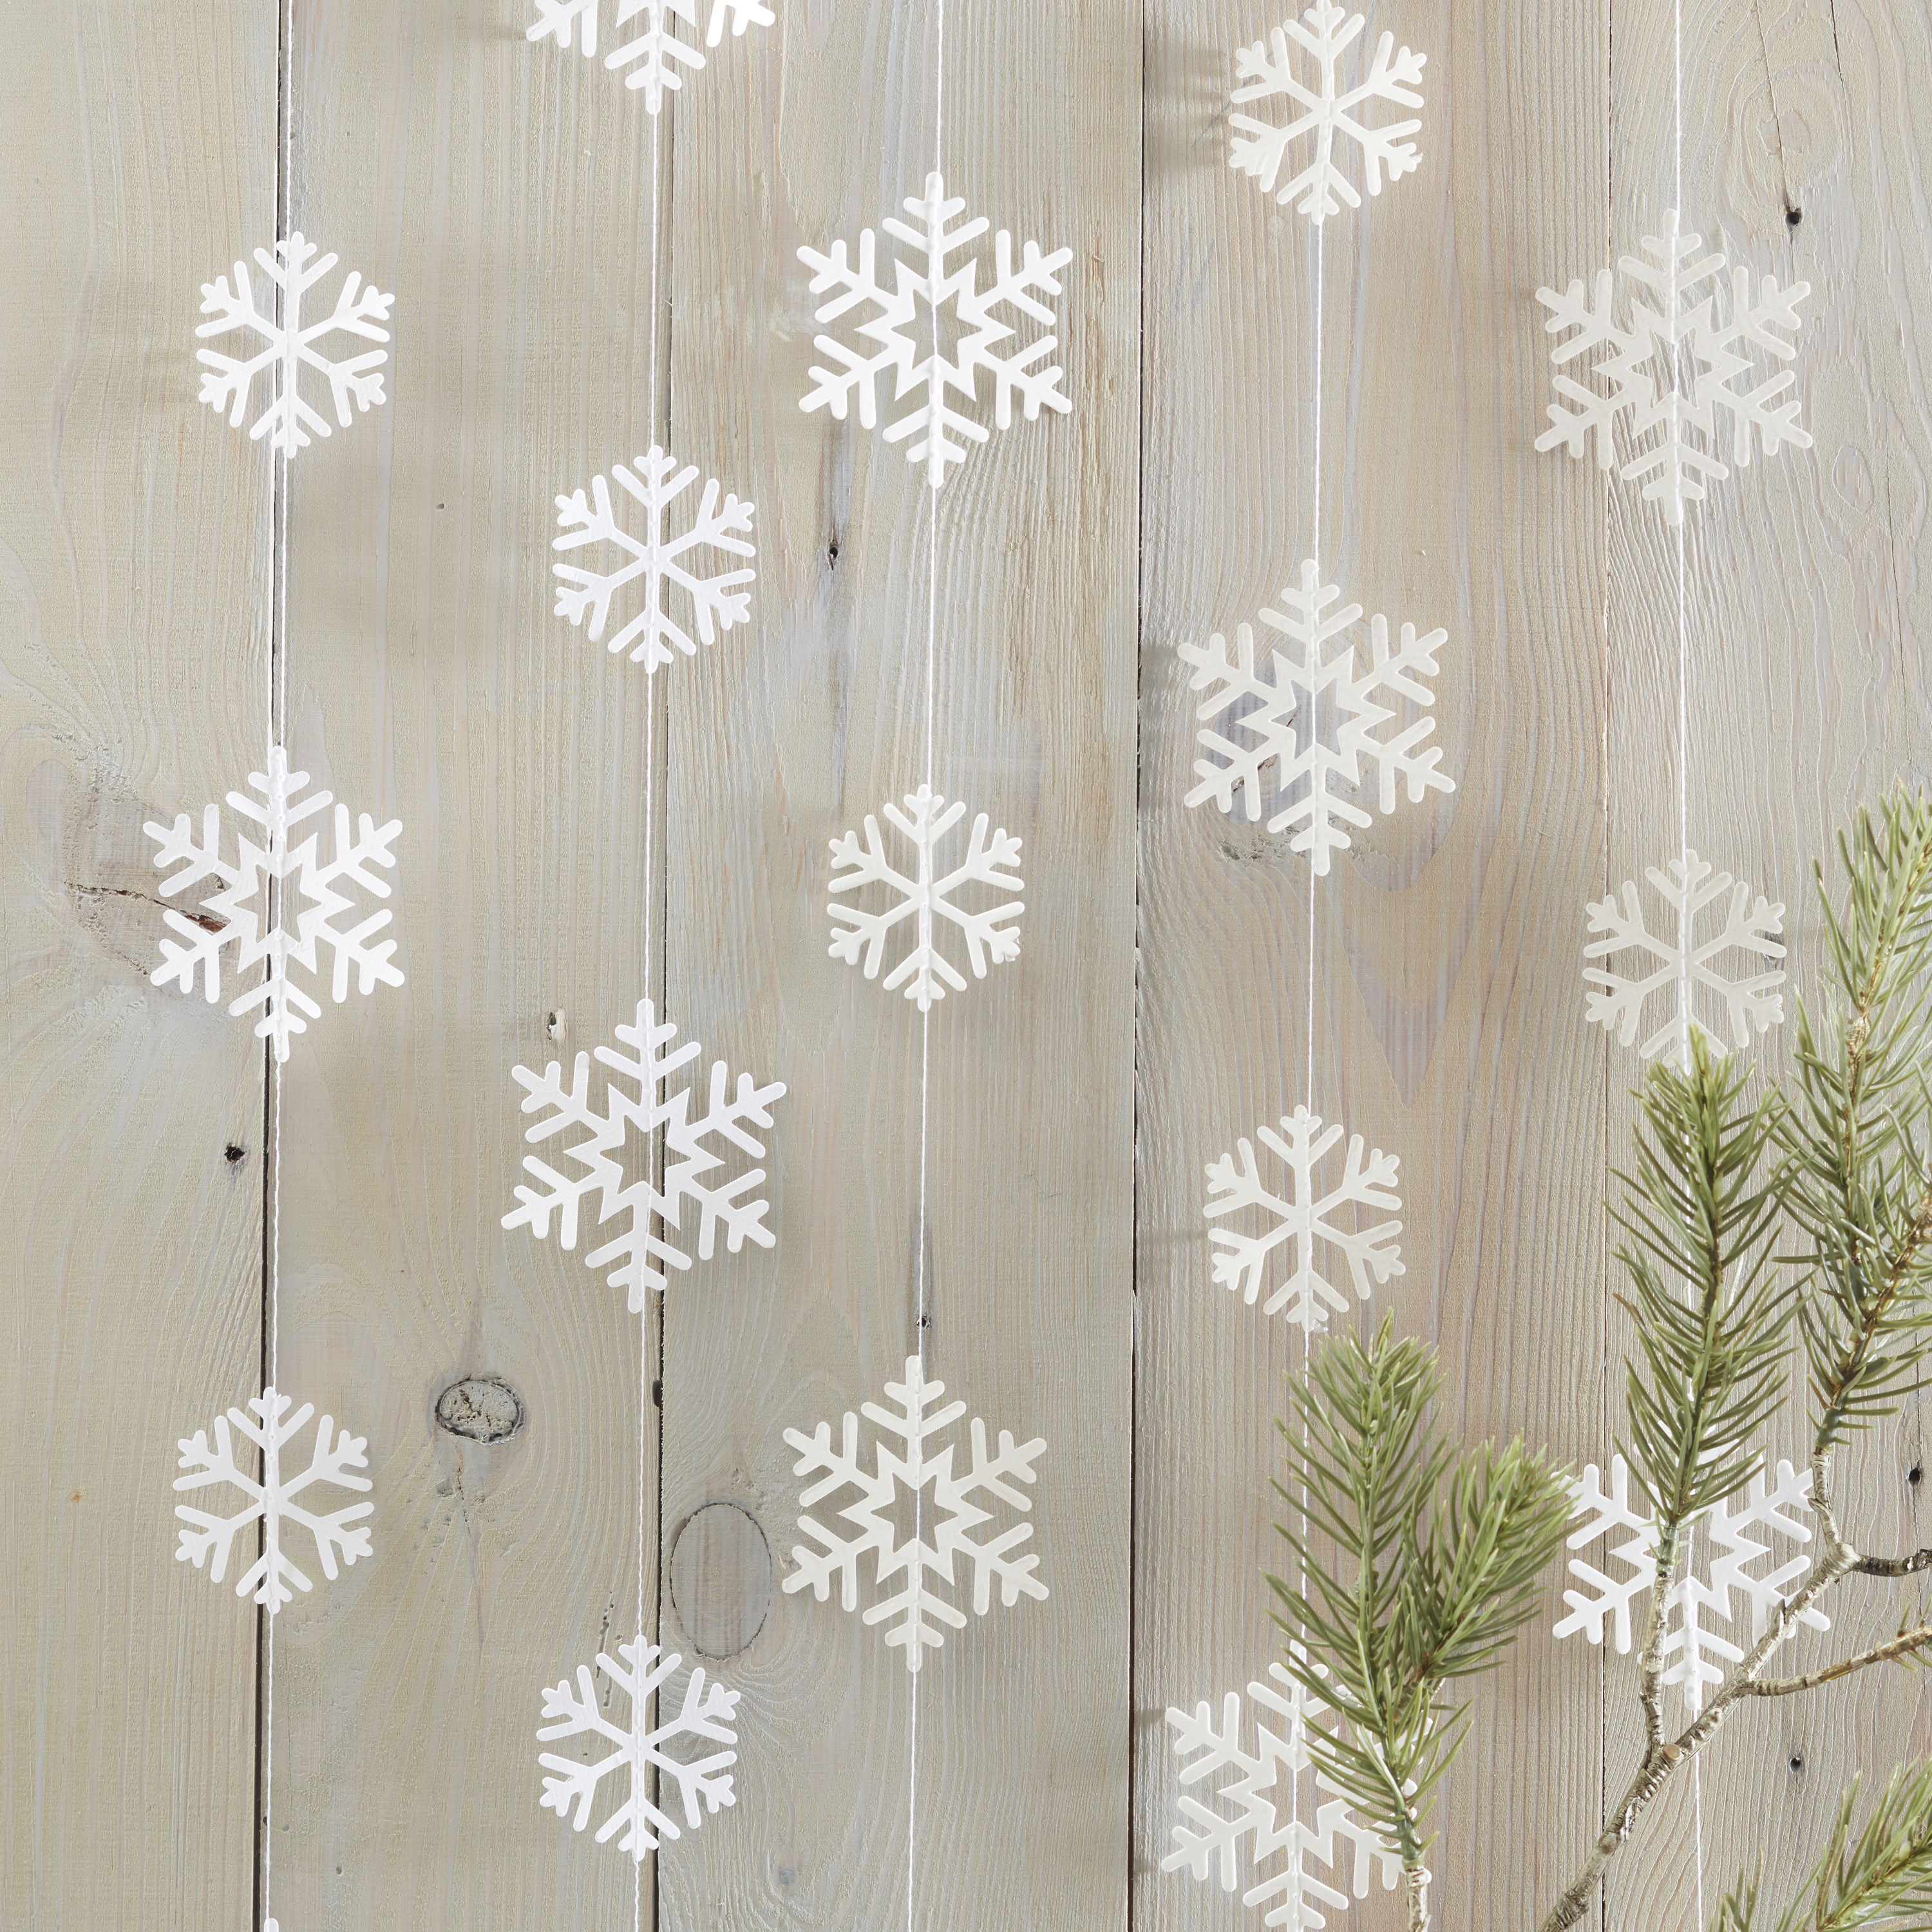 Ginger Ray Snowflake Garland Bunting Christmas Hanging Decoration 5metres